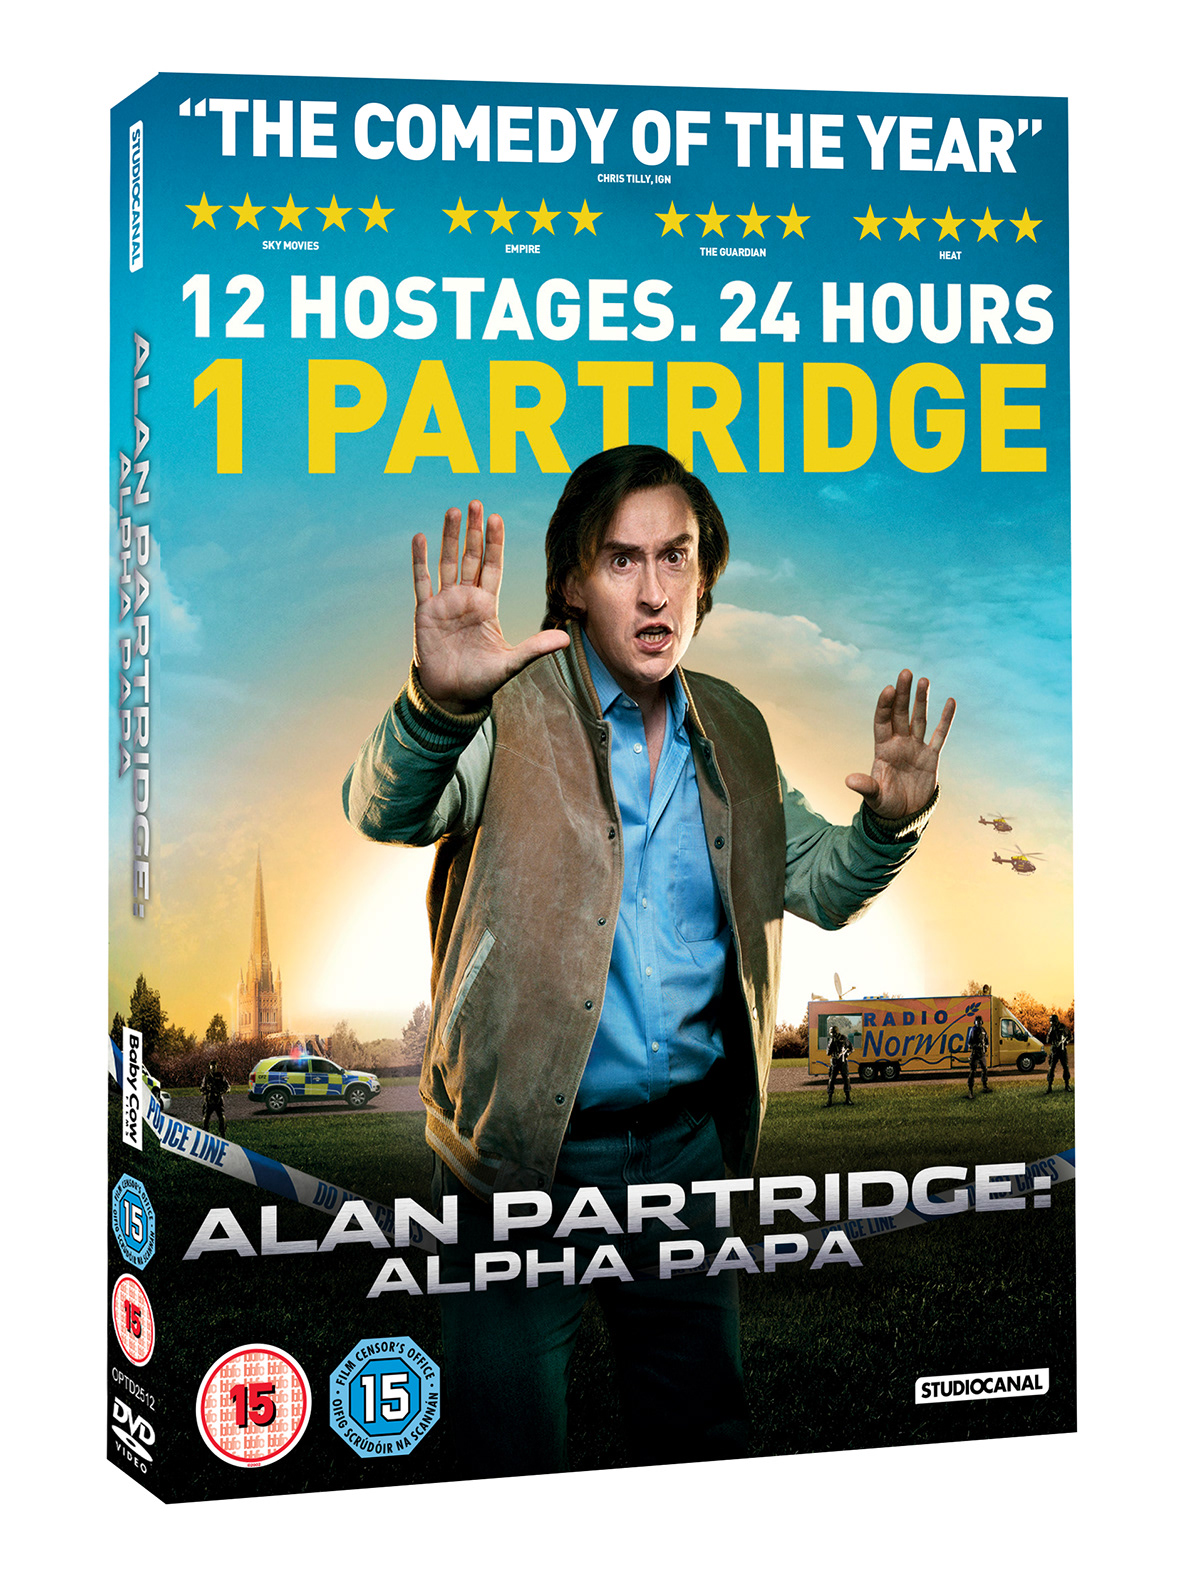 Alan Partridge alpha papa DVD blu-ray design marketing  